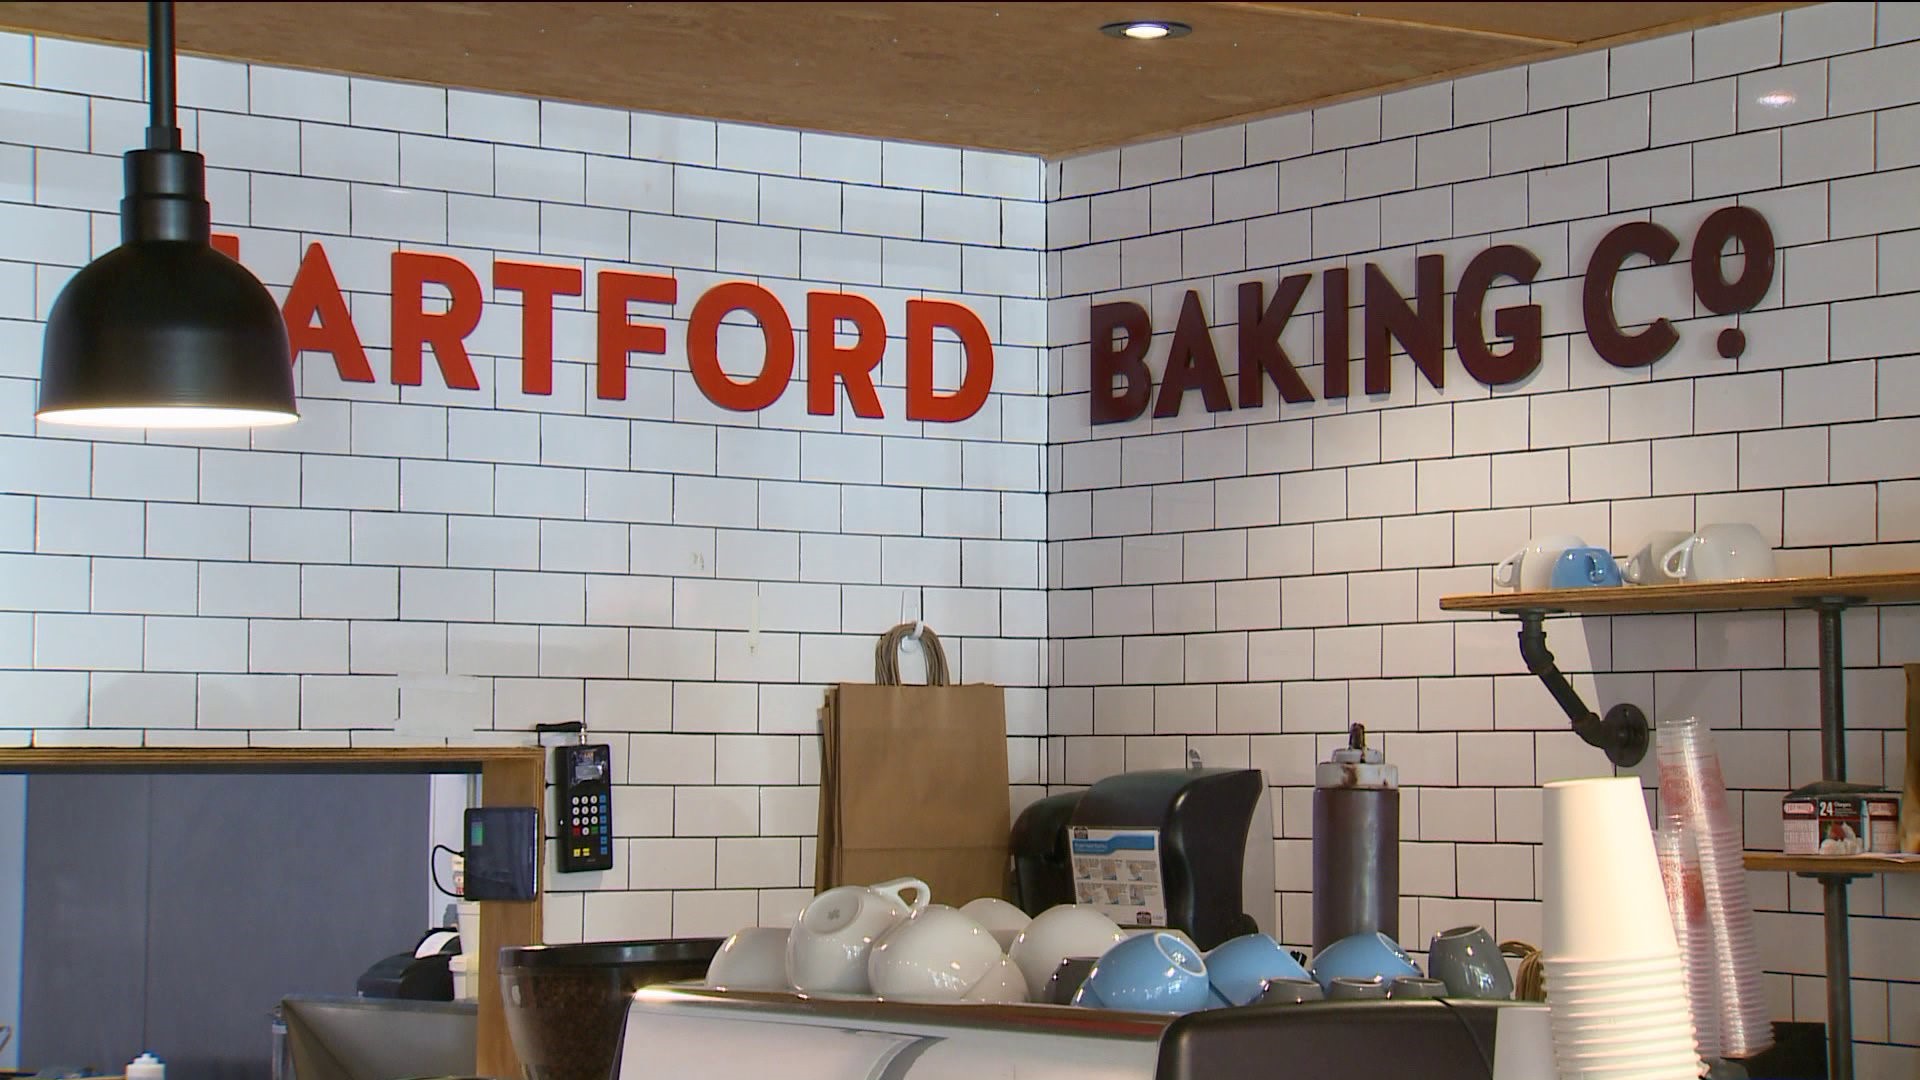 WorkinCT: Hartford Baking Co. celebrates 8 years